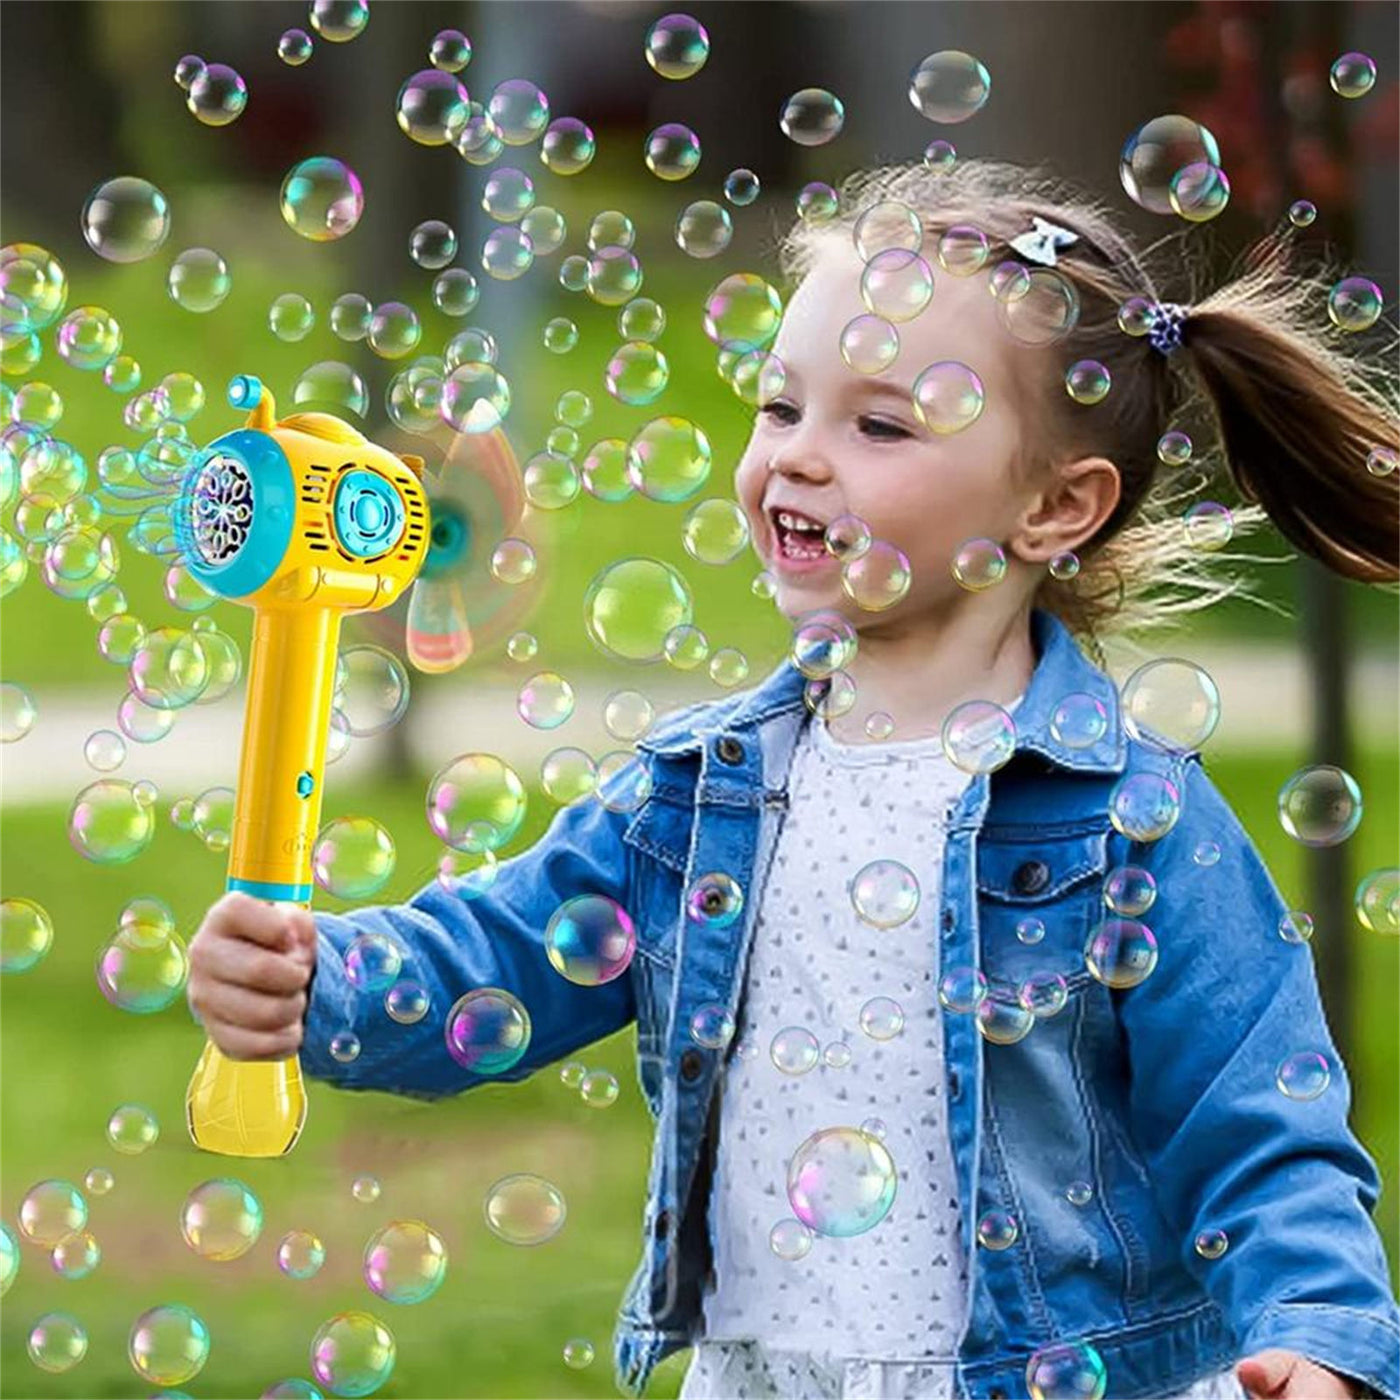 Children's Windmill Submarine Bubble Stick Hand-Held Automatic Bubble Toy